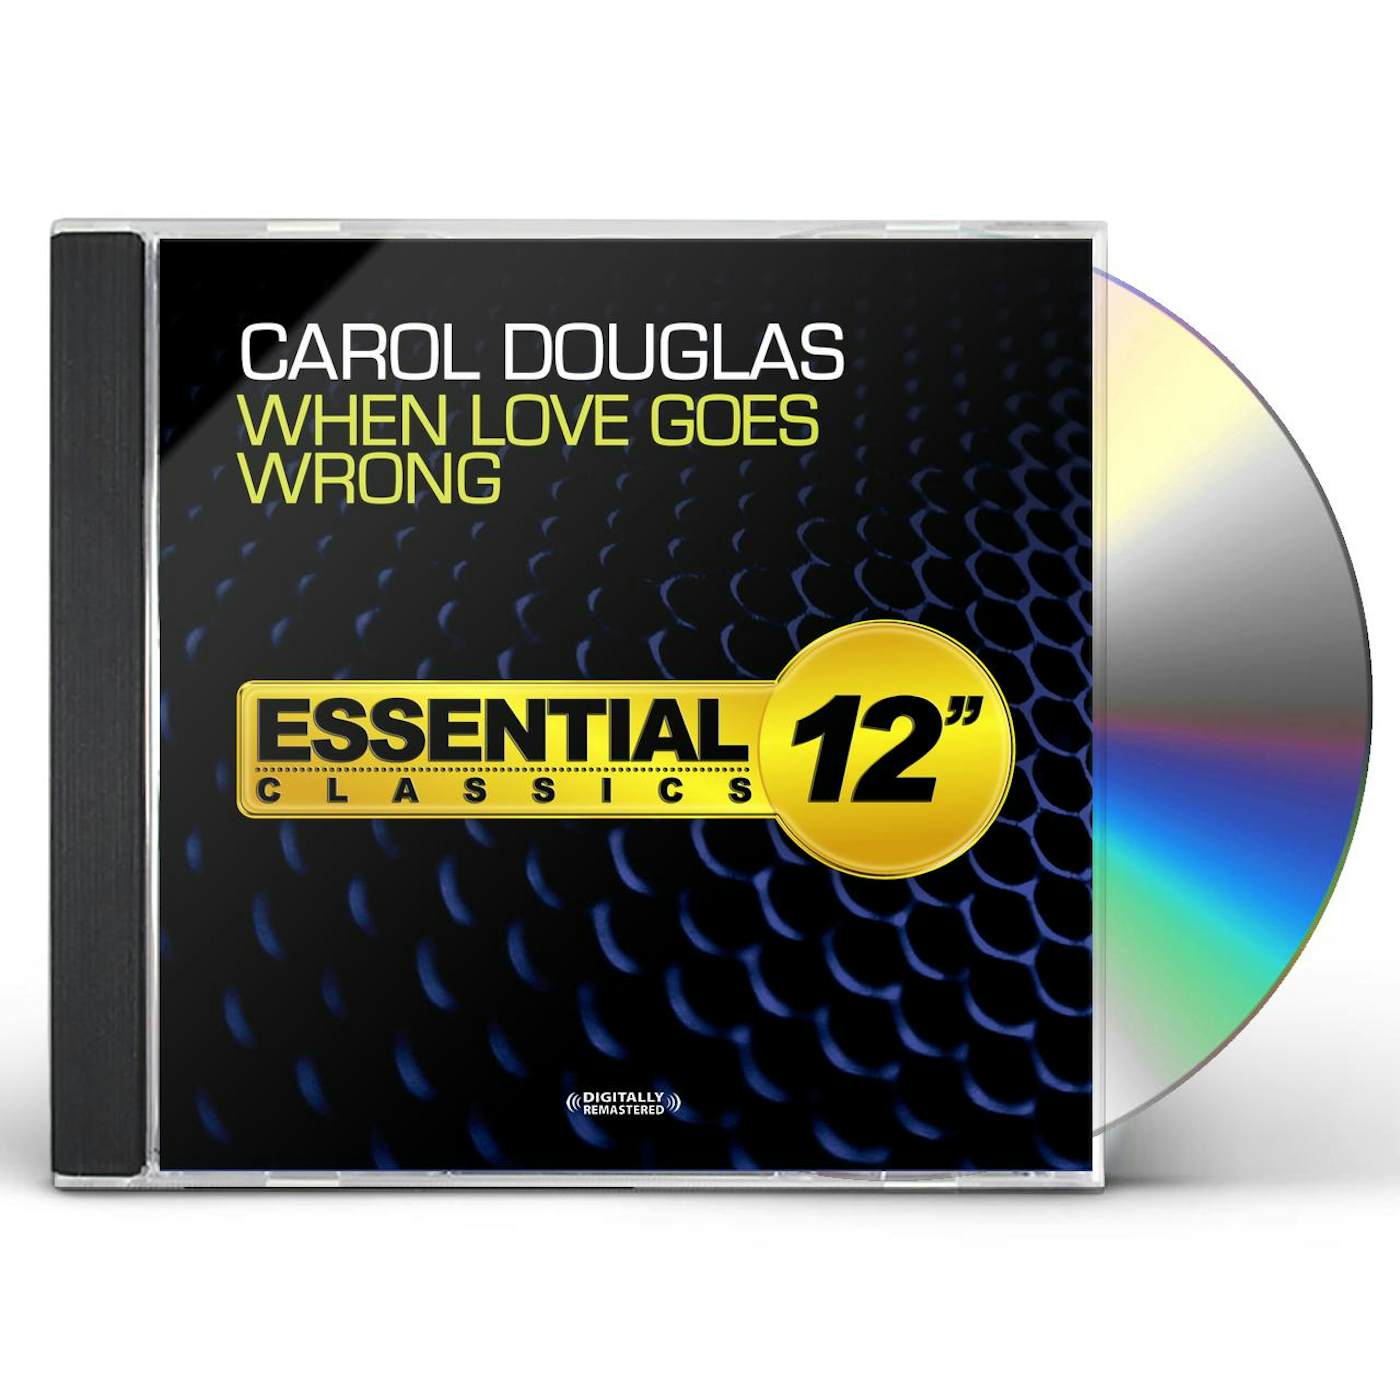 Carol Douglas WHEN LOVE GOES WRONG CD